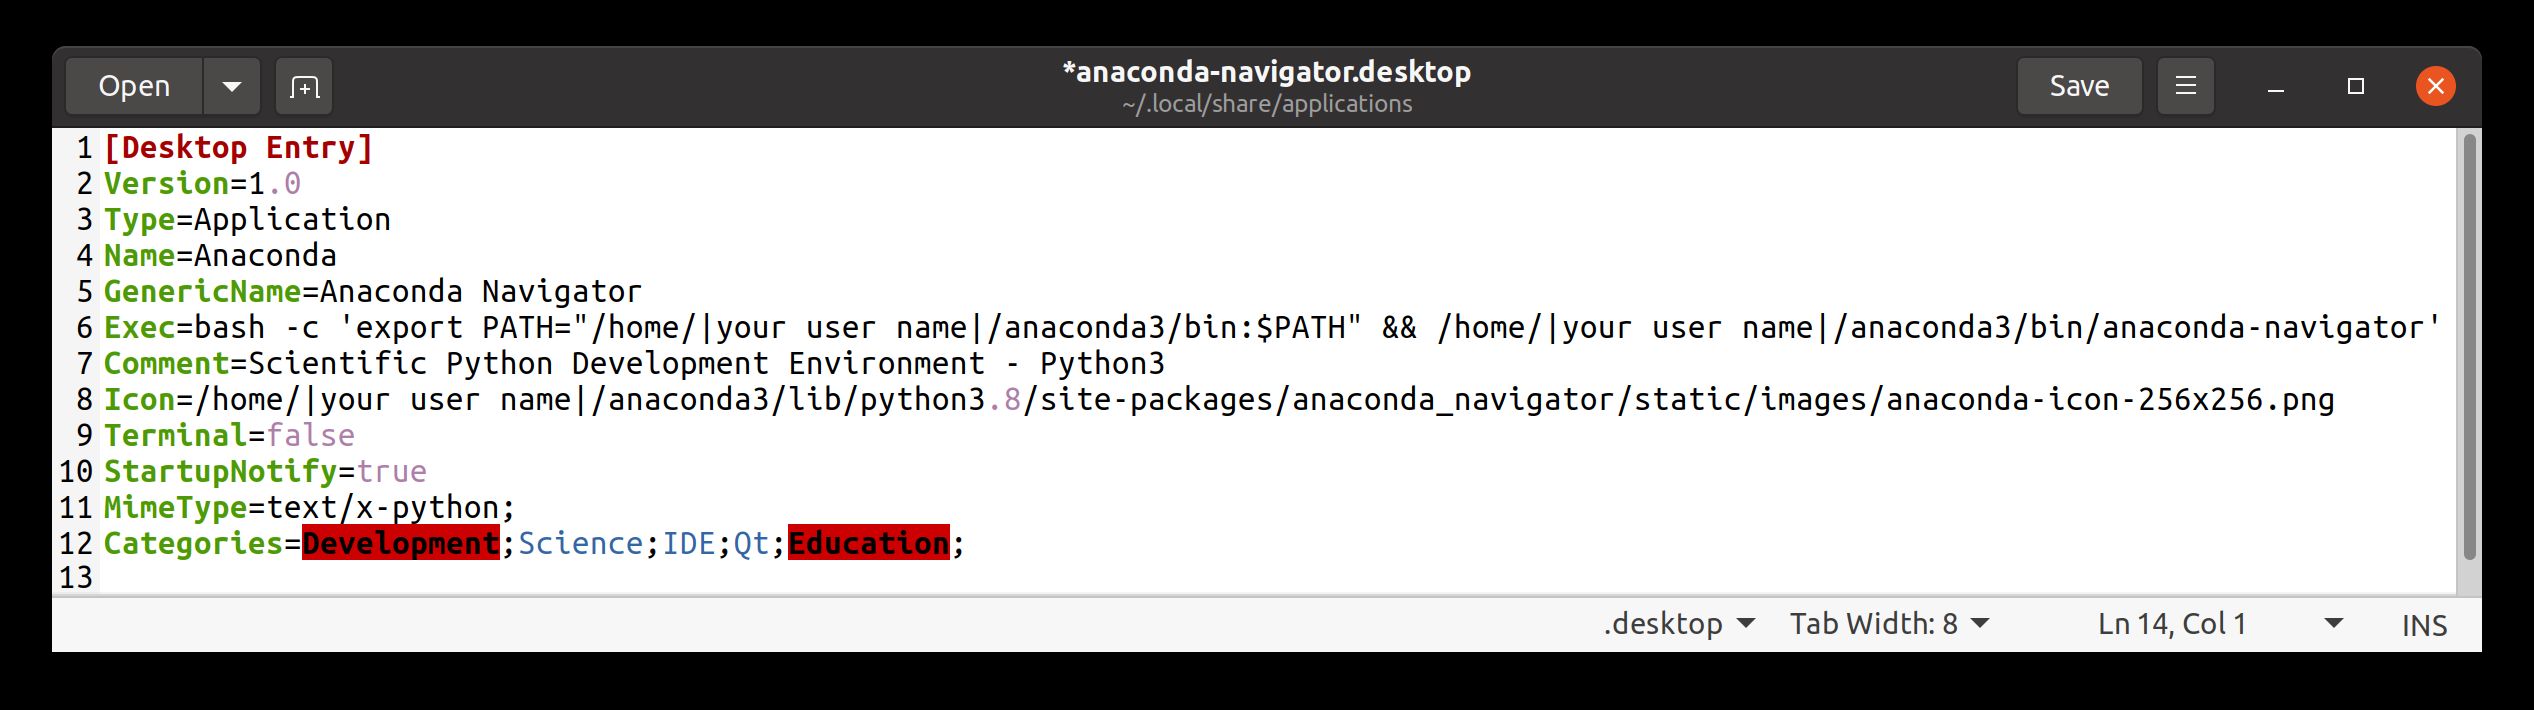 anaconda-navigator.desktop